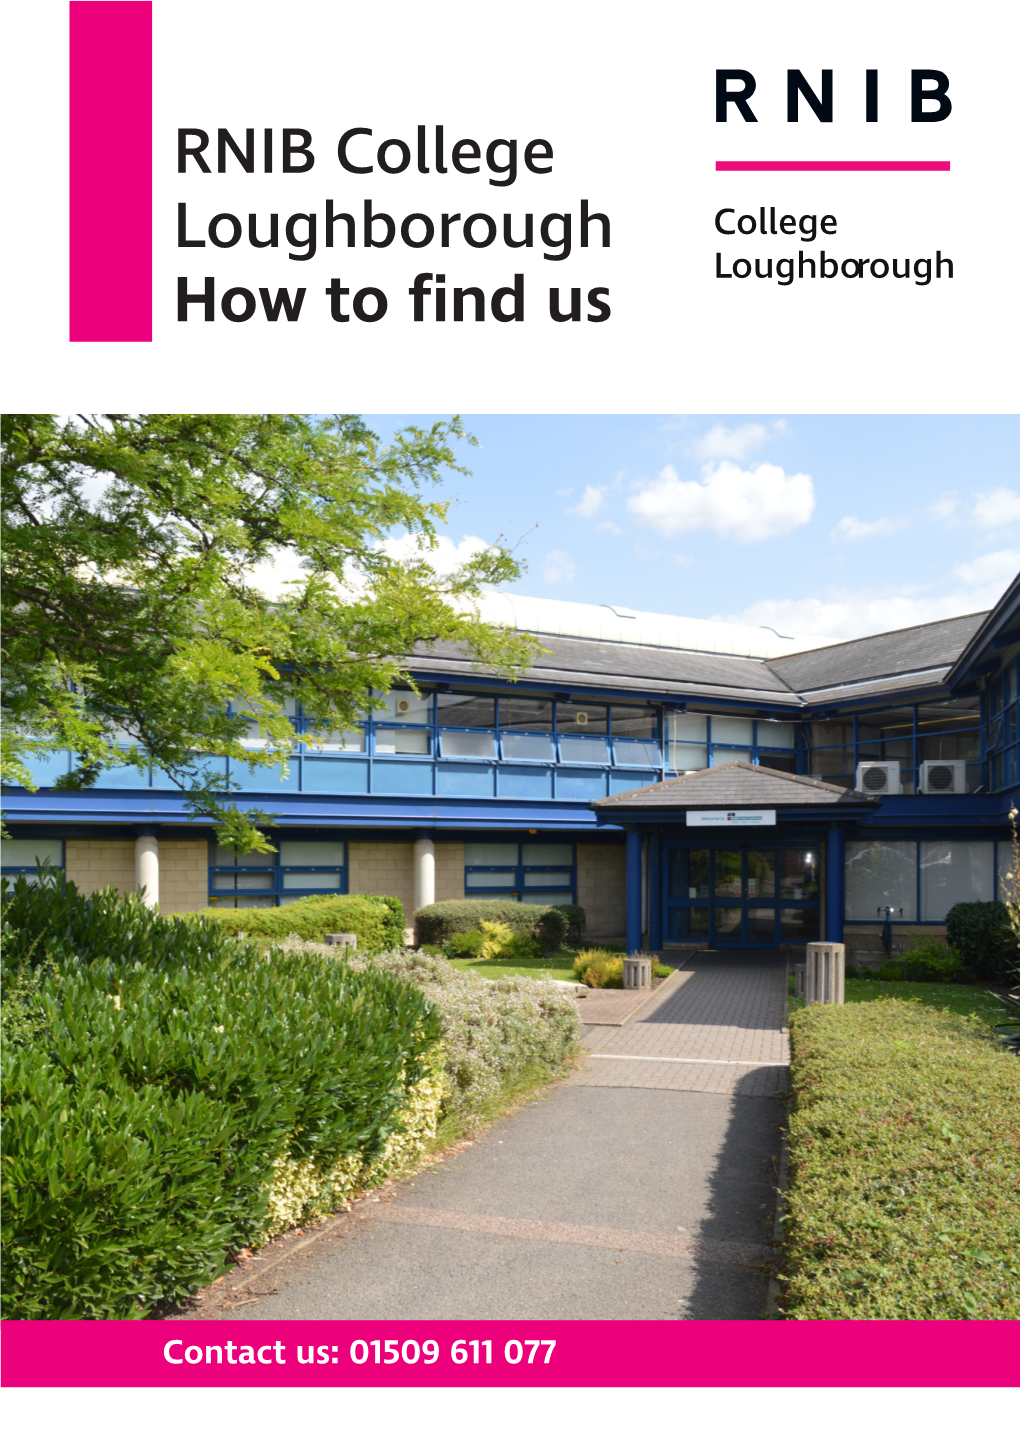 RNIB College Loughborough How to Find Us